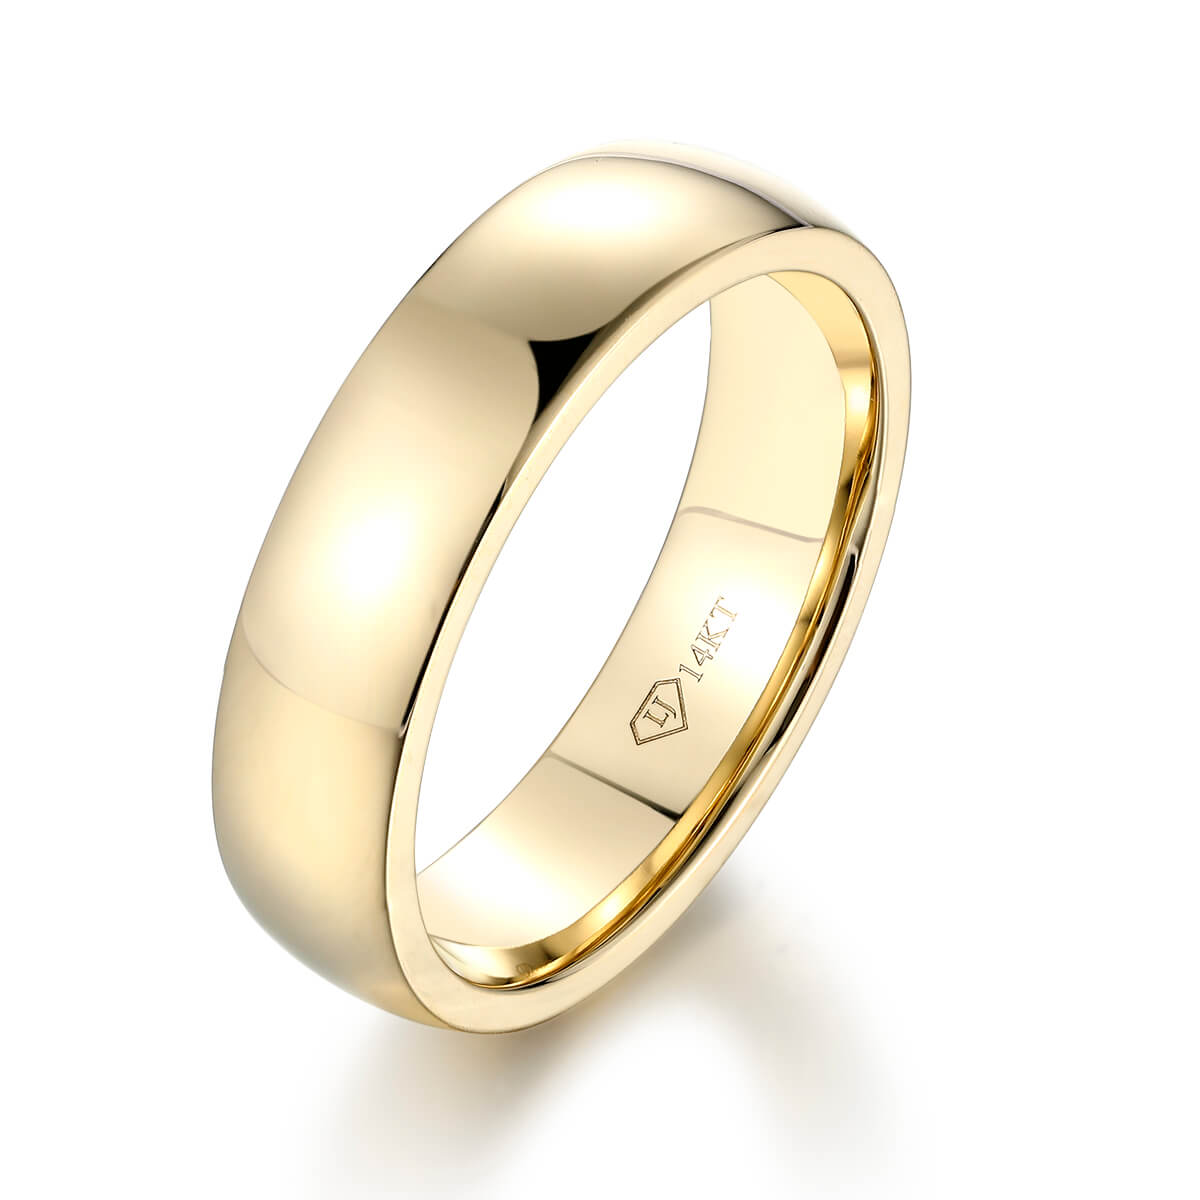 Five ways to customise men's wedding rings